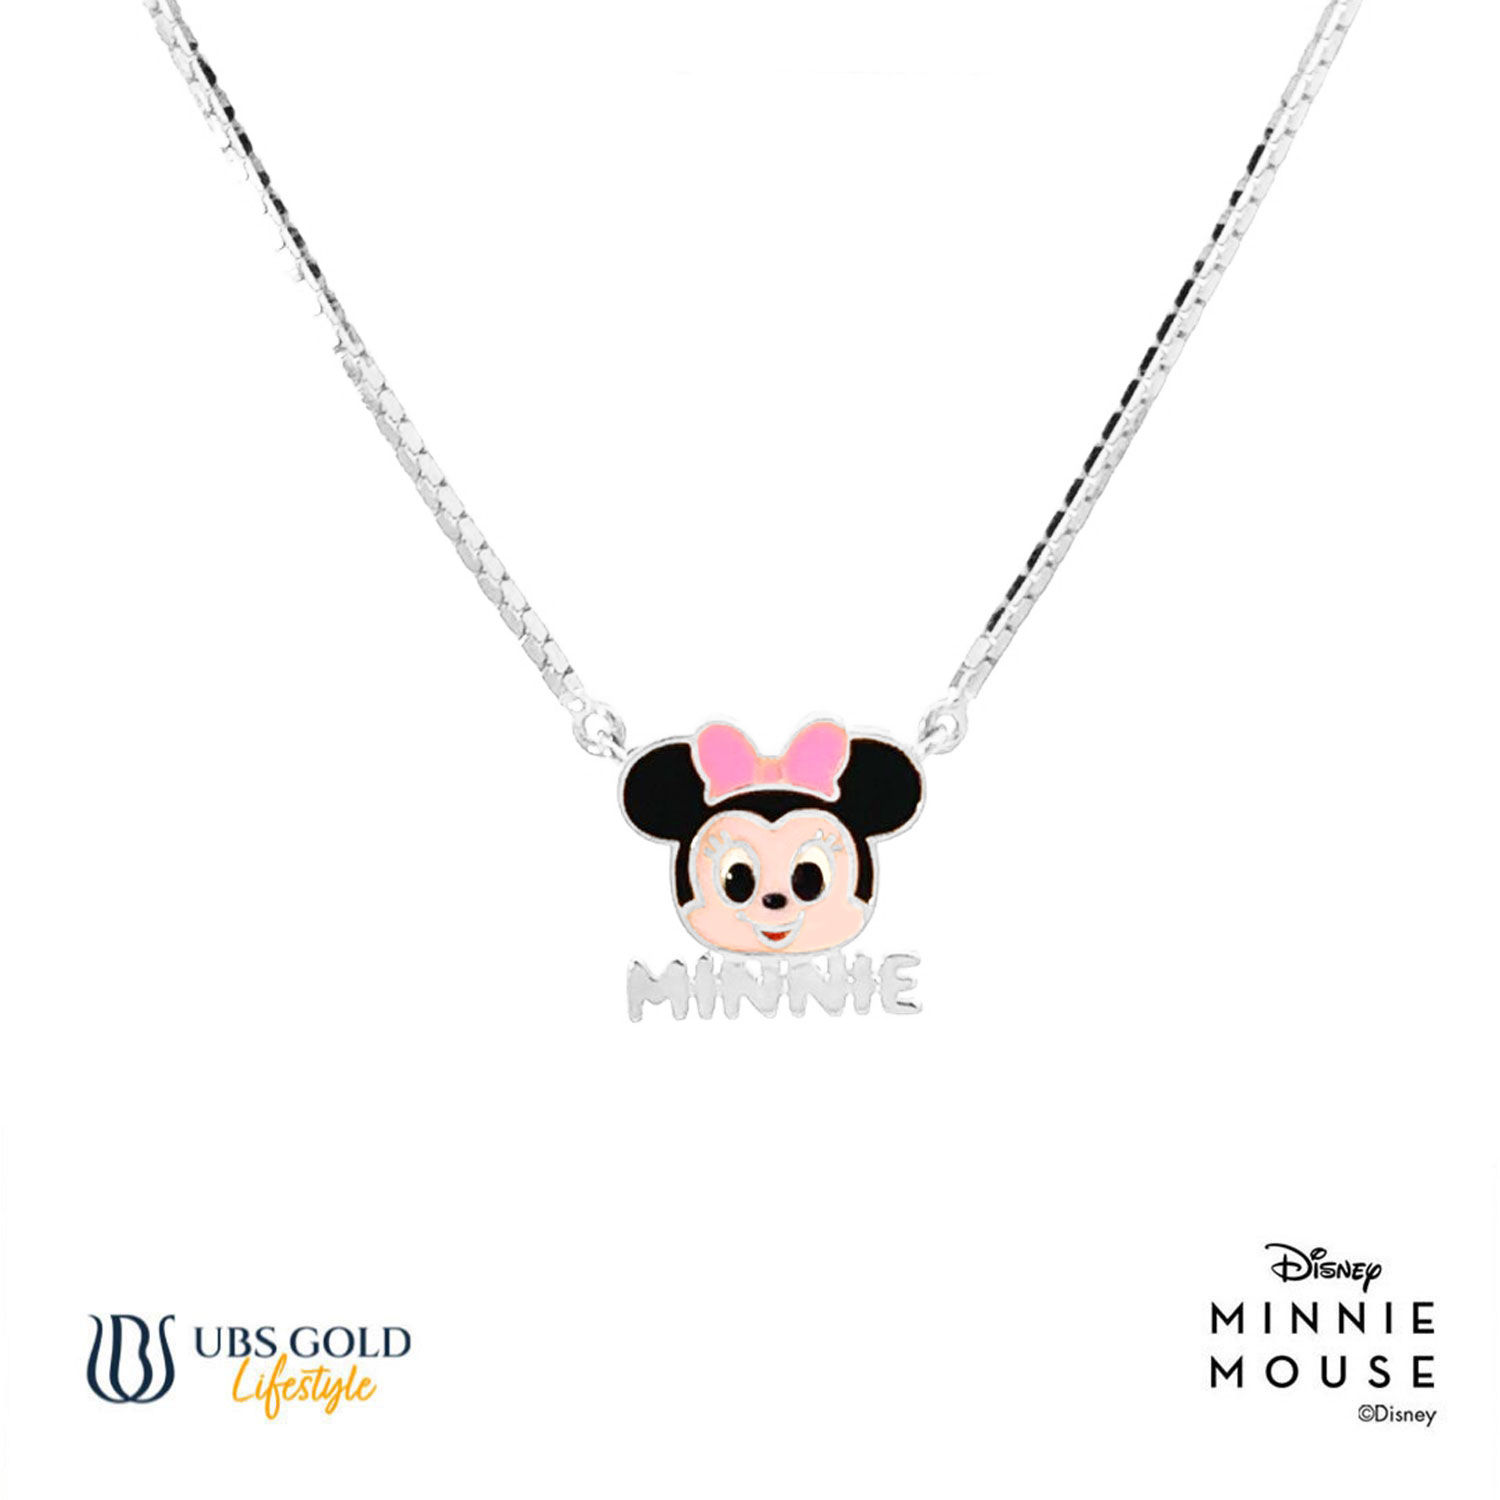 UBS Kalung Emas Anak Disney Minnie Mouse - Kky0444 - 17K